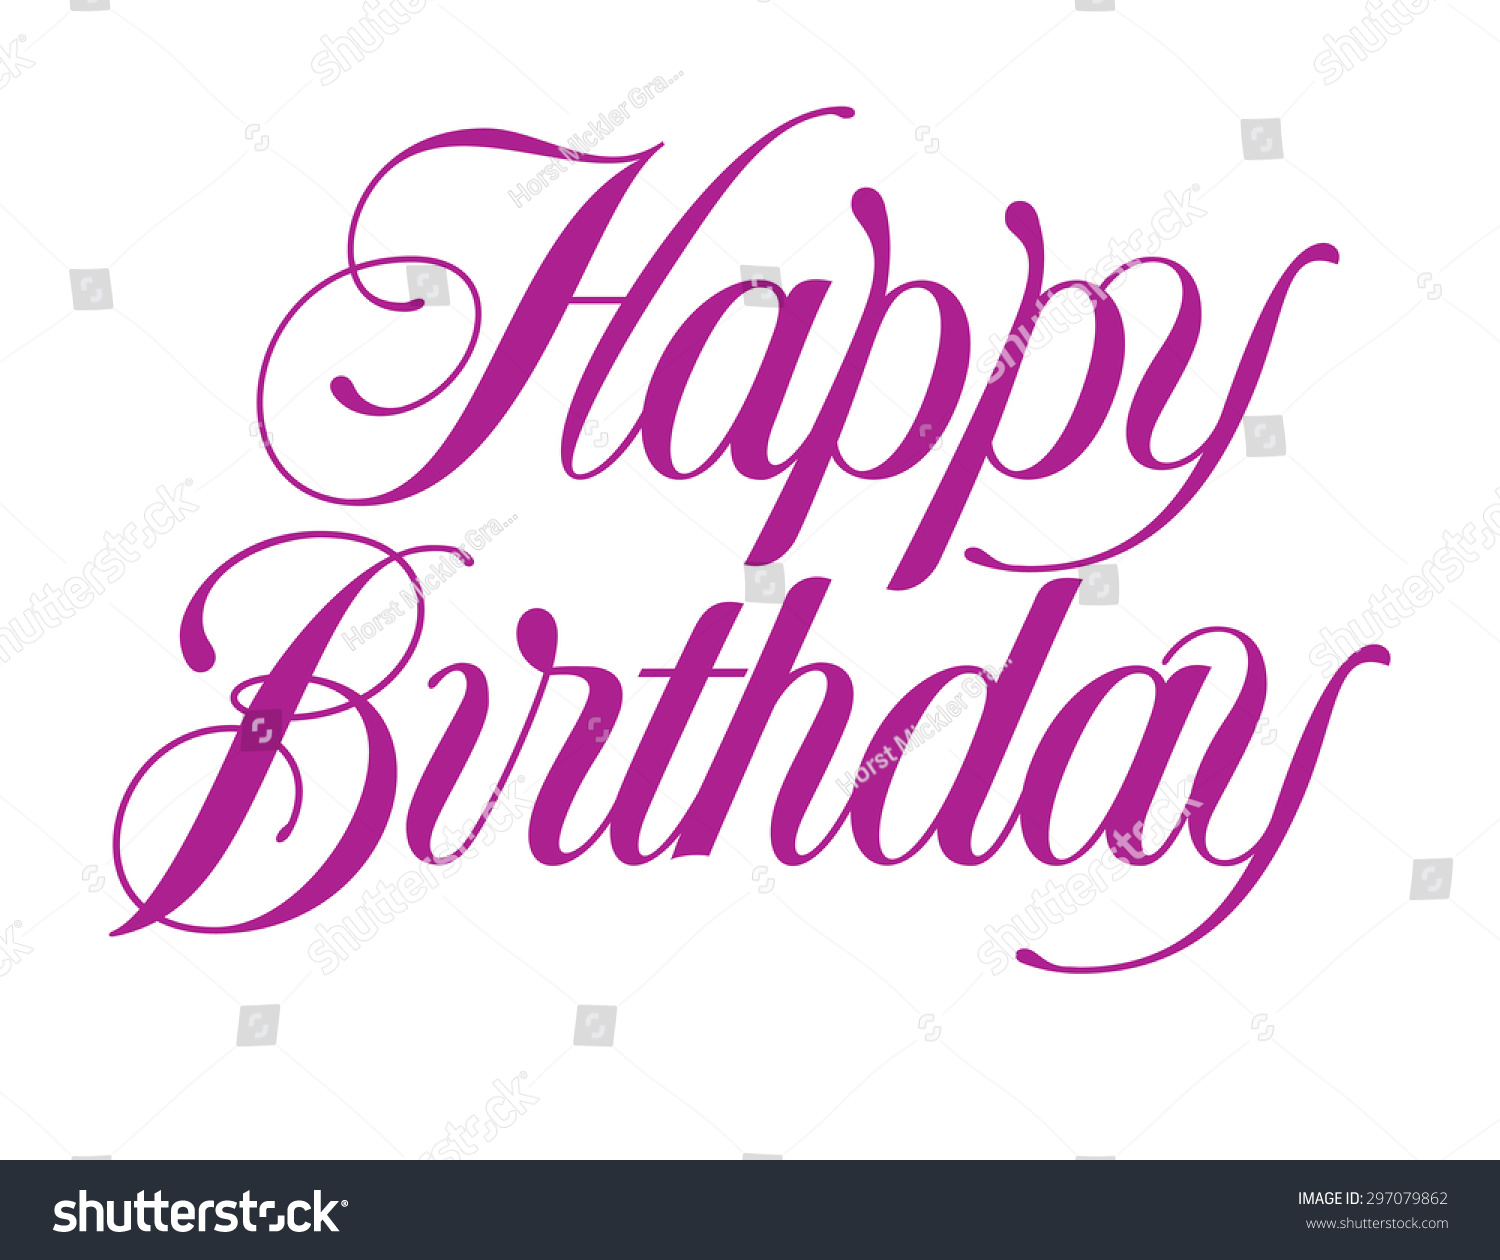 Happy Birthday Script Hand Lettering Vector - 297079862 : Shutterstock